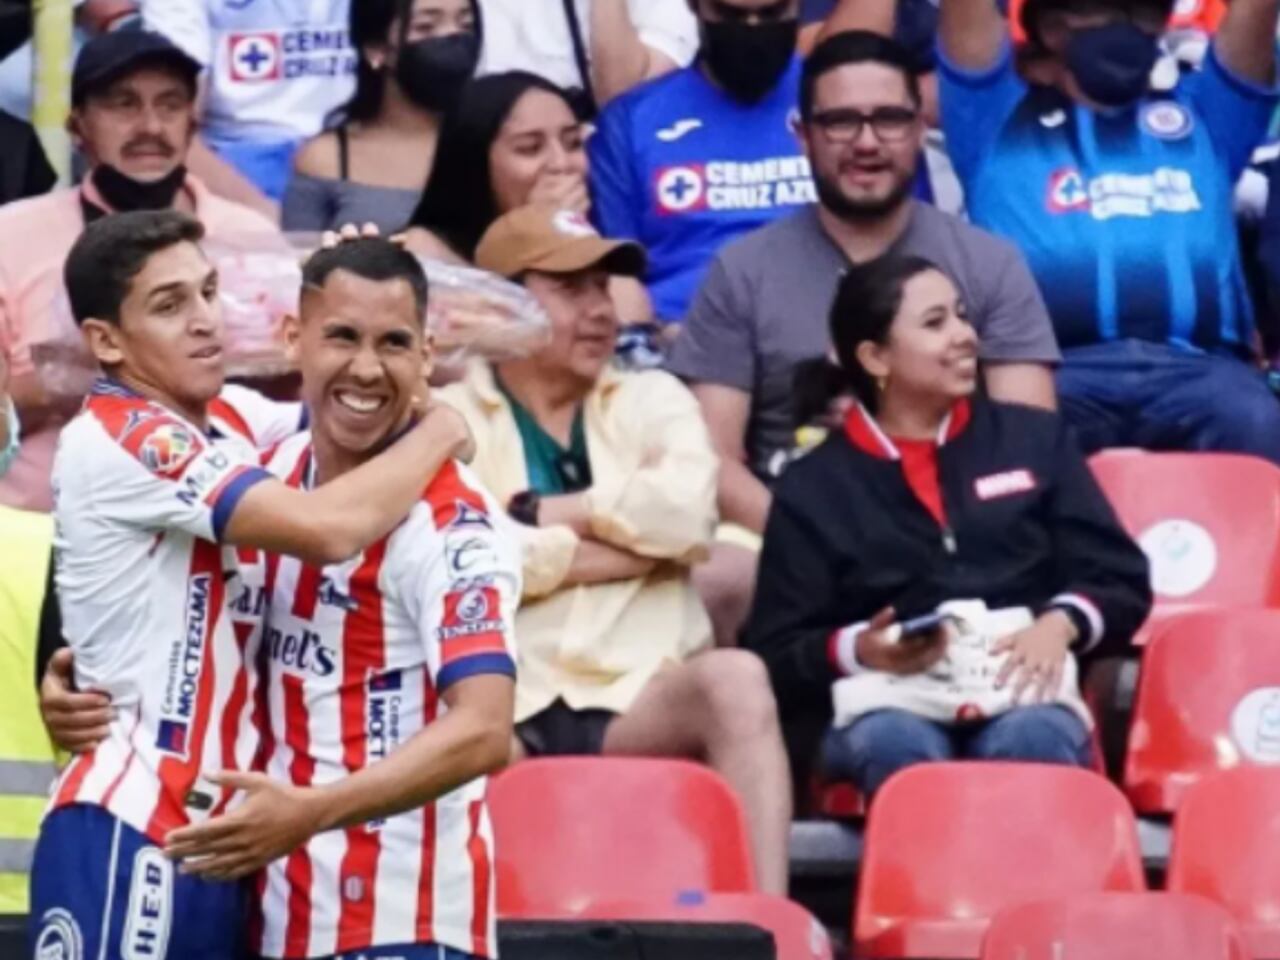 Who is Ricardo Chávez, the player who gave Atlético San Luis the win over Cruz Azul?